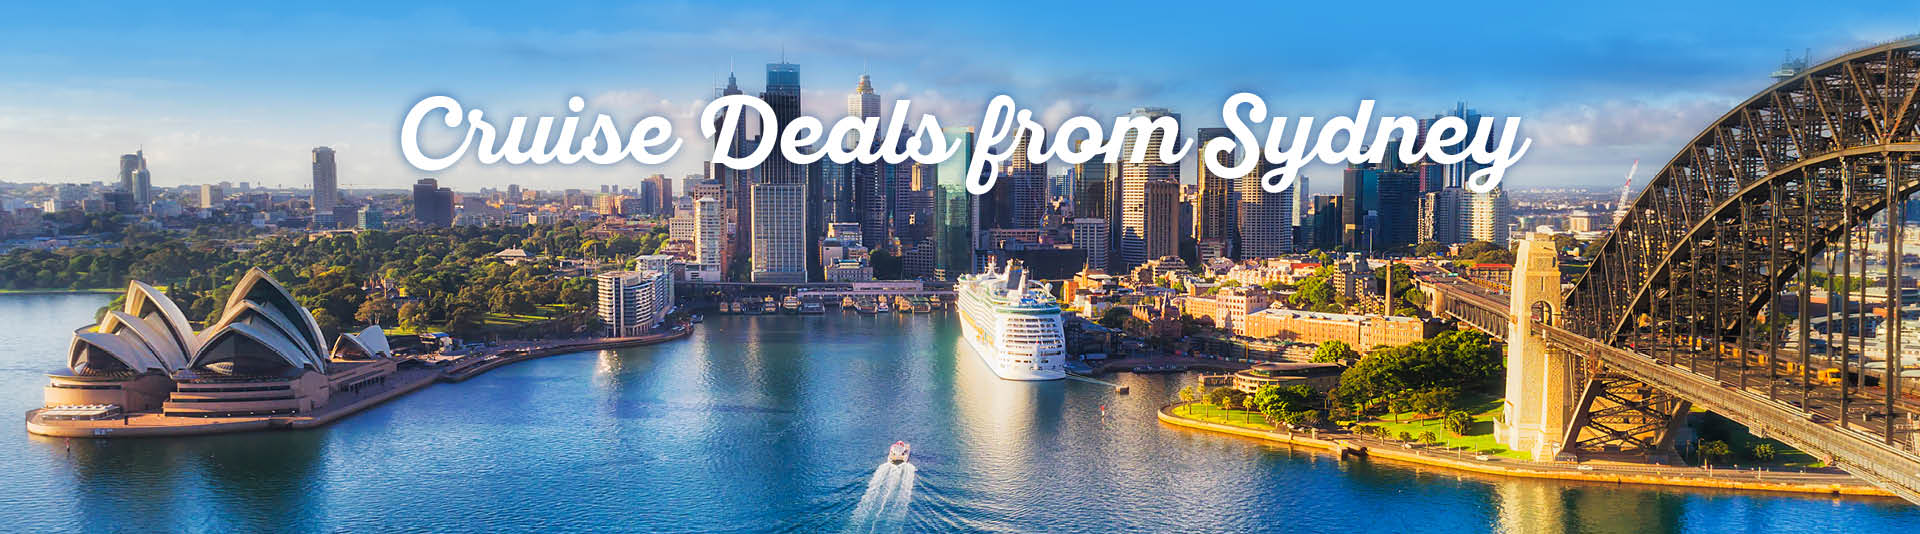 cruise-deals-from-sydney-1.jpg